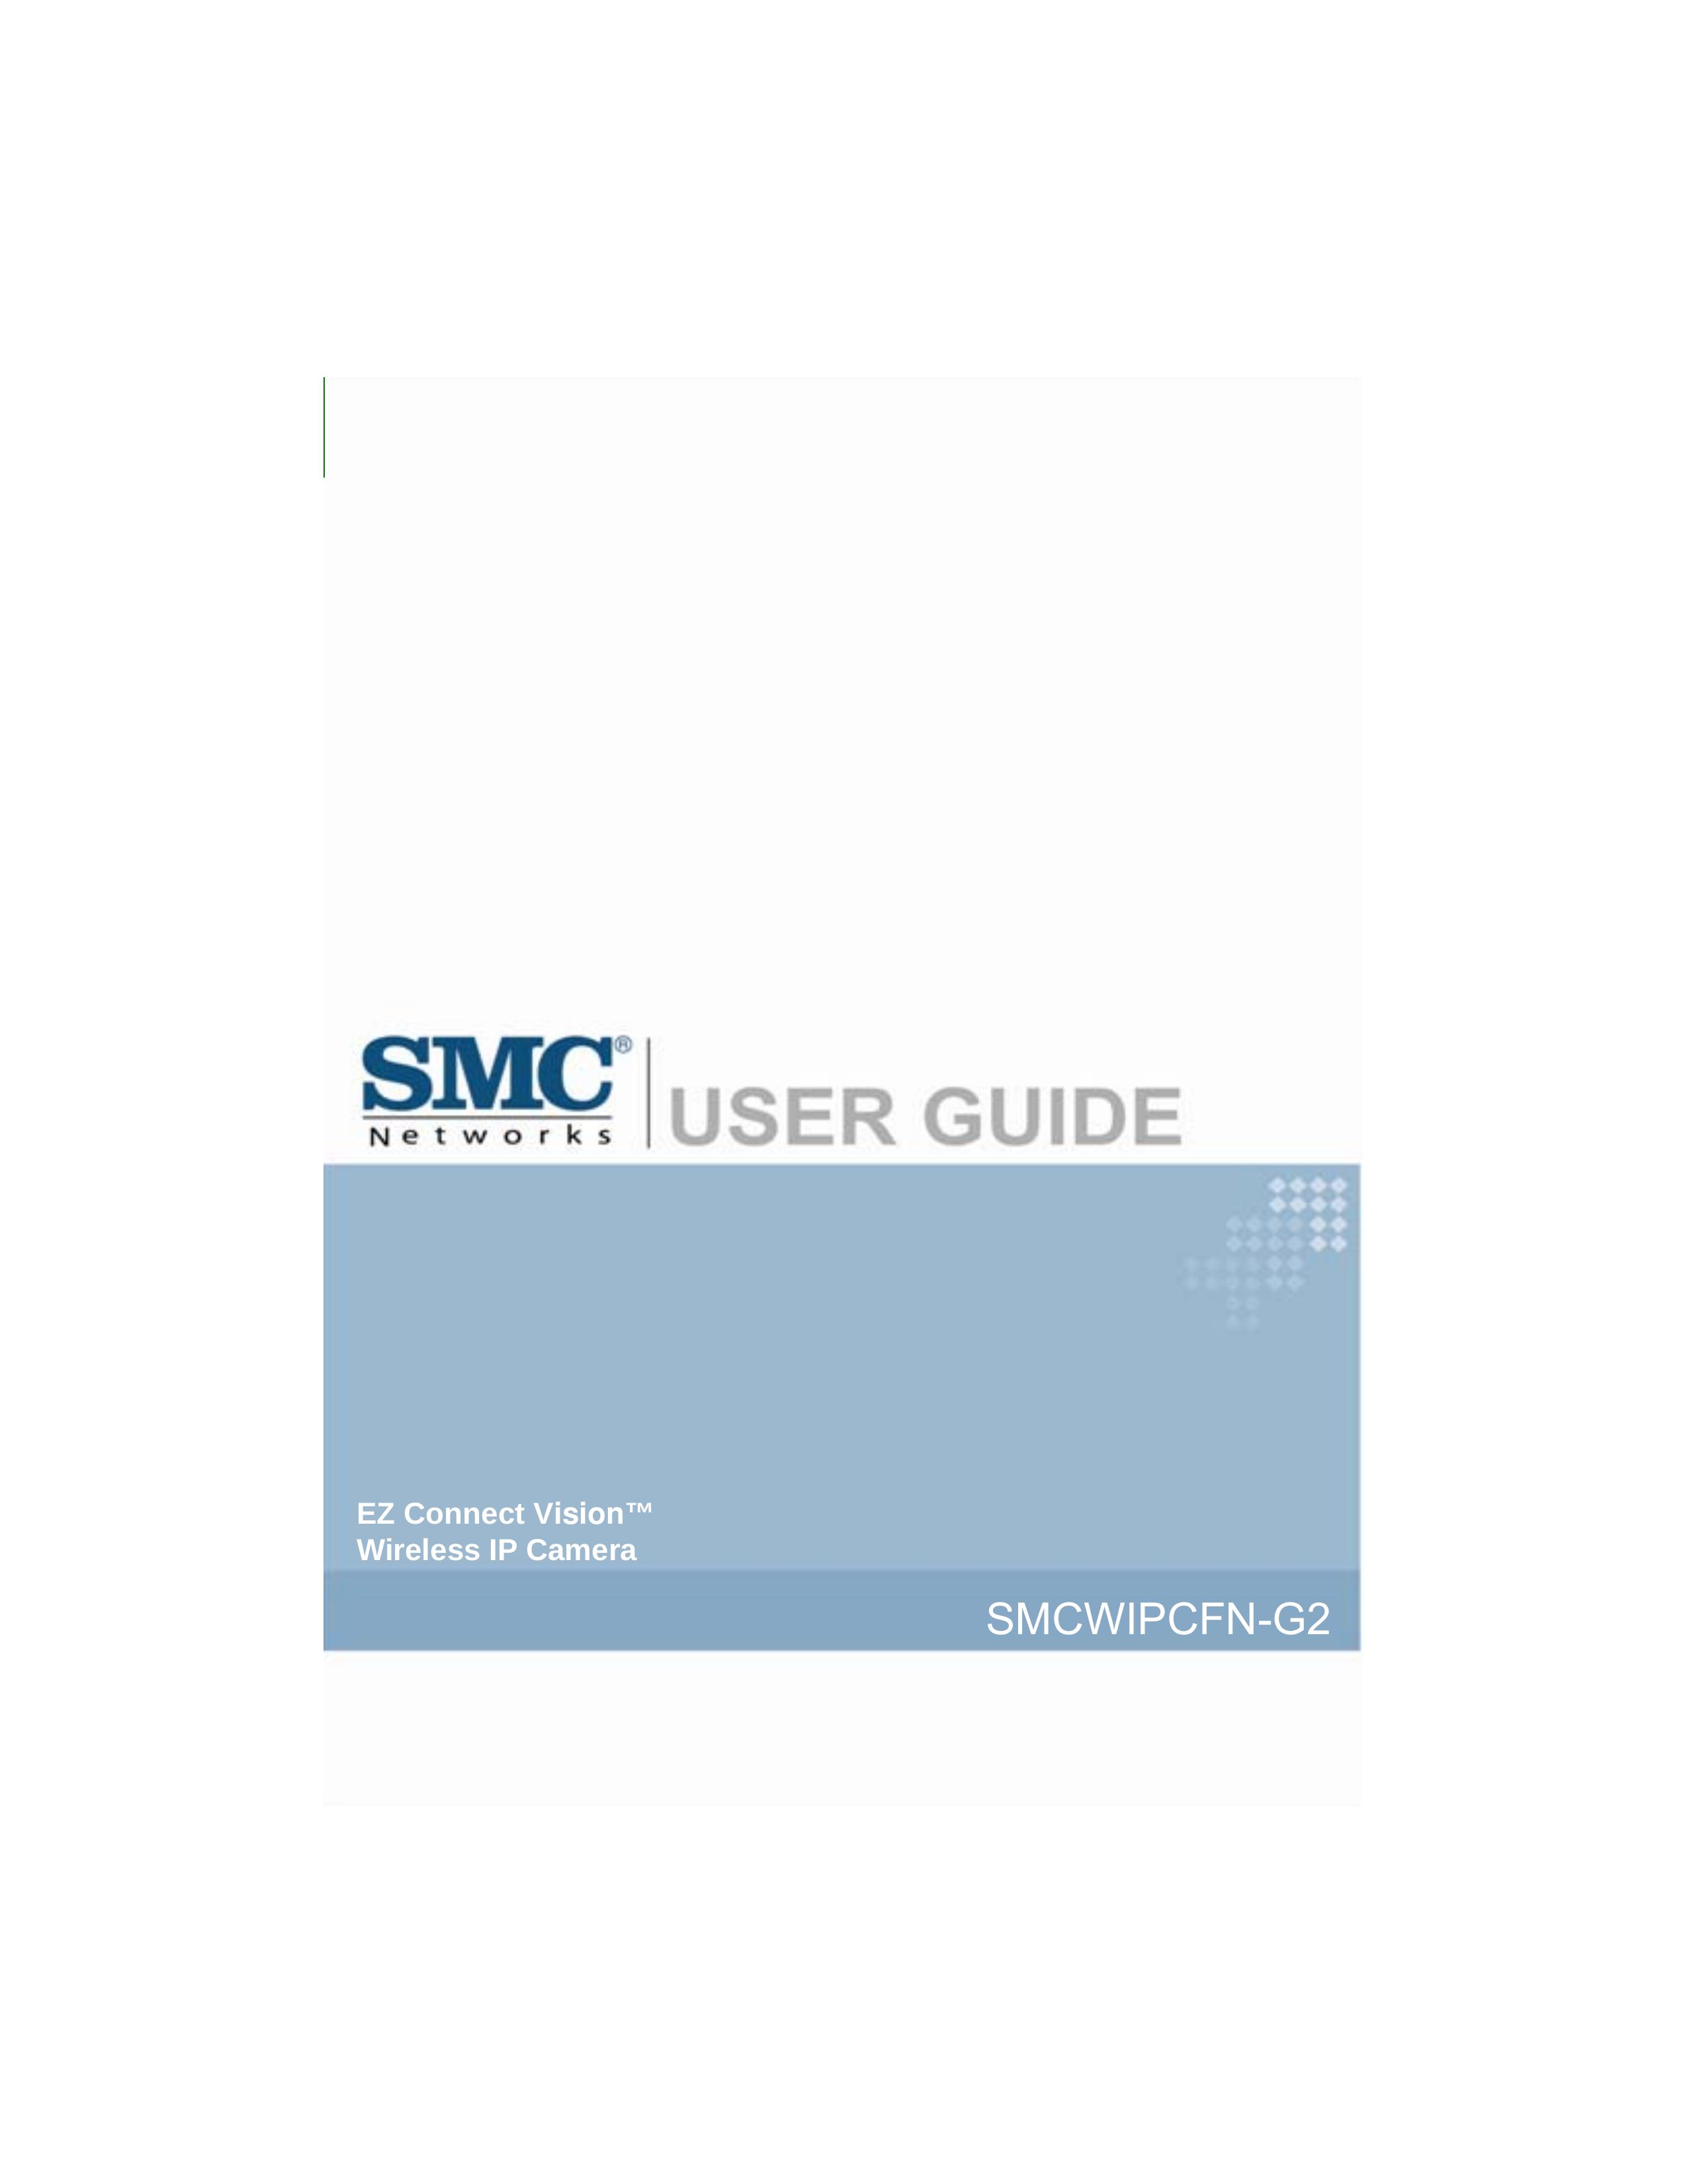 SMC Networks SMCWIPCFN-G2 Security Camera User Manual